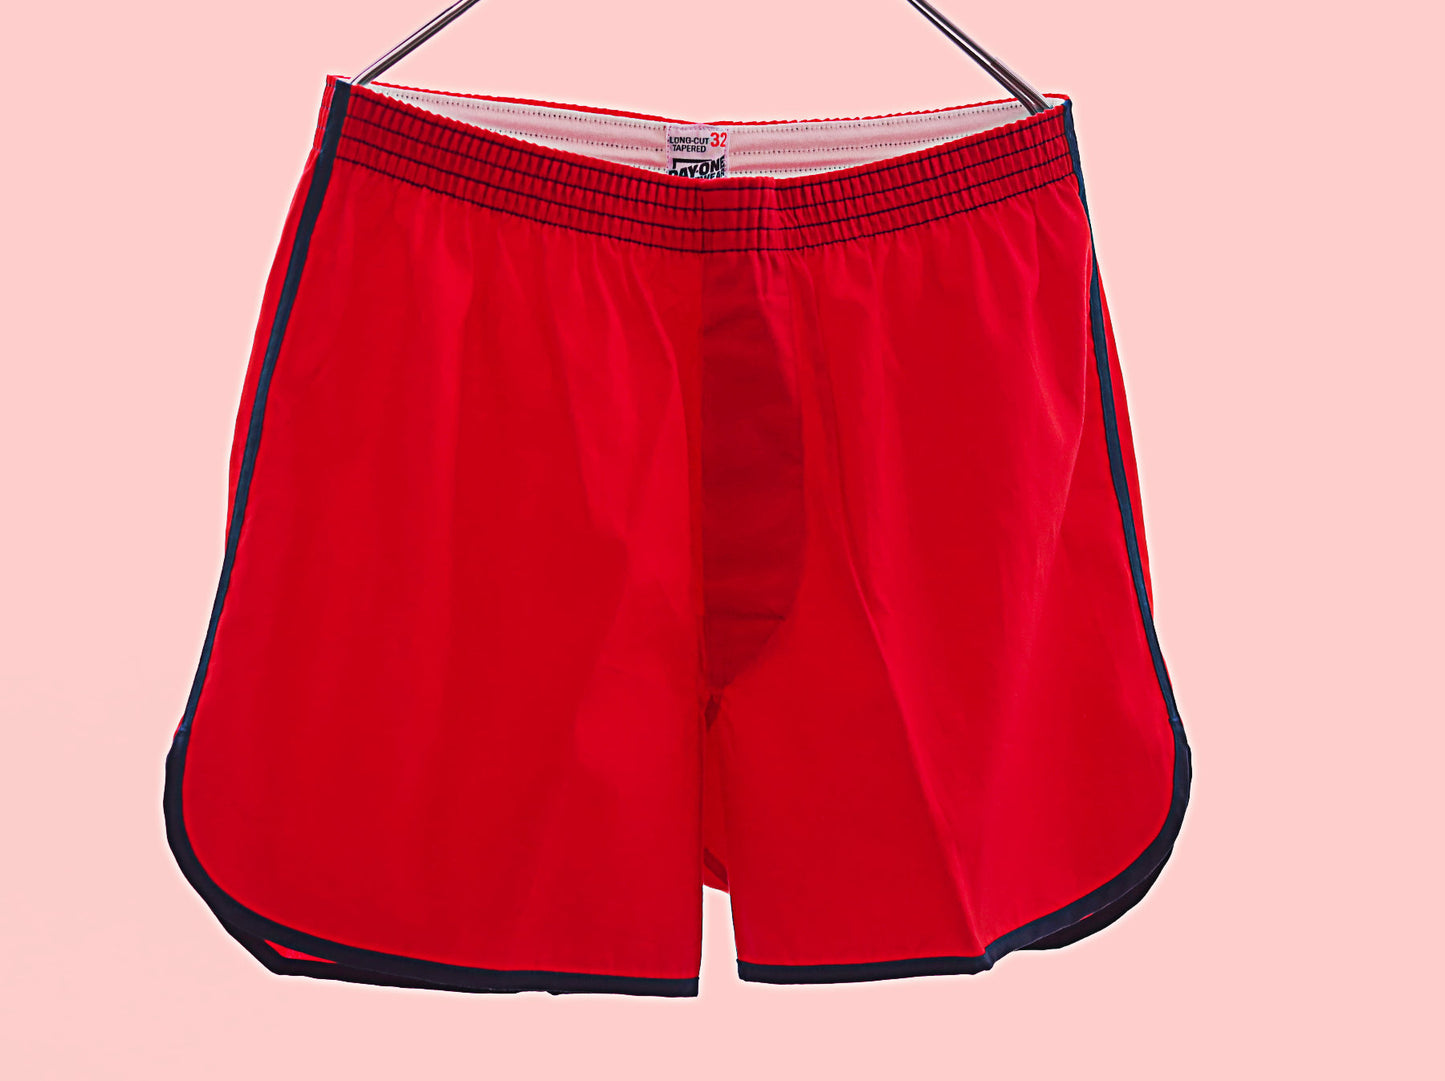 Vintage Boxer Shorts, Vintage Shorts, Red Mens Underwear, Mens Shorts